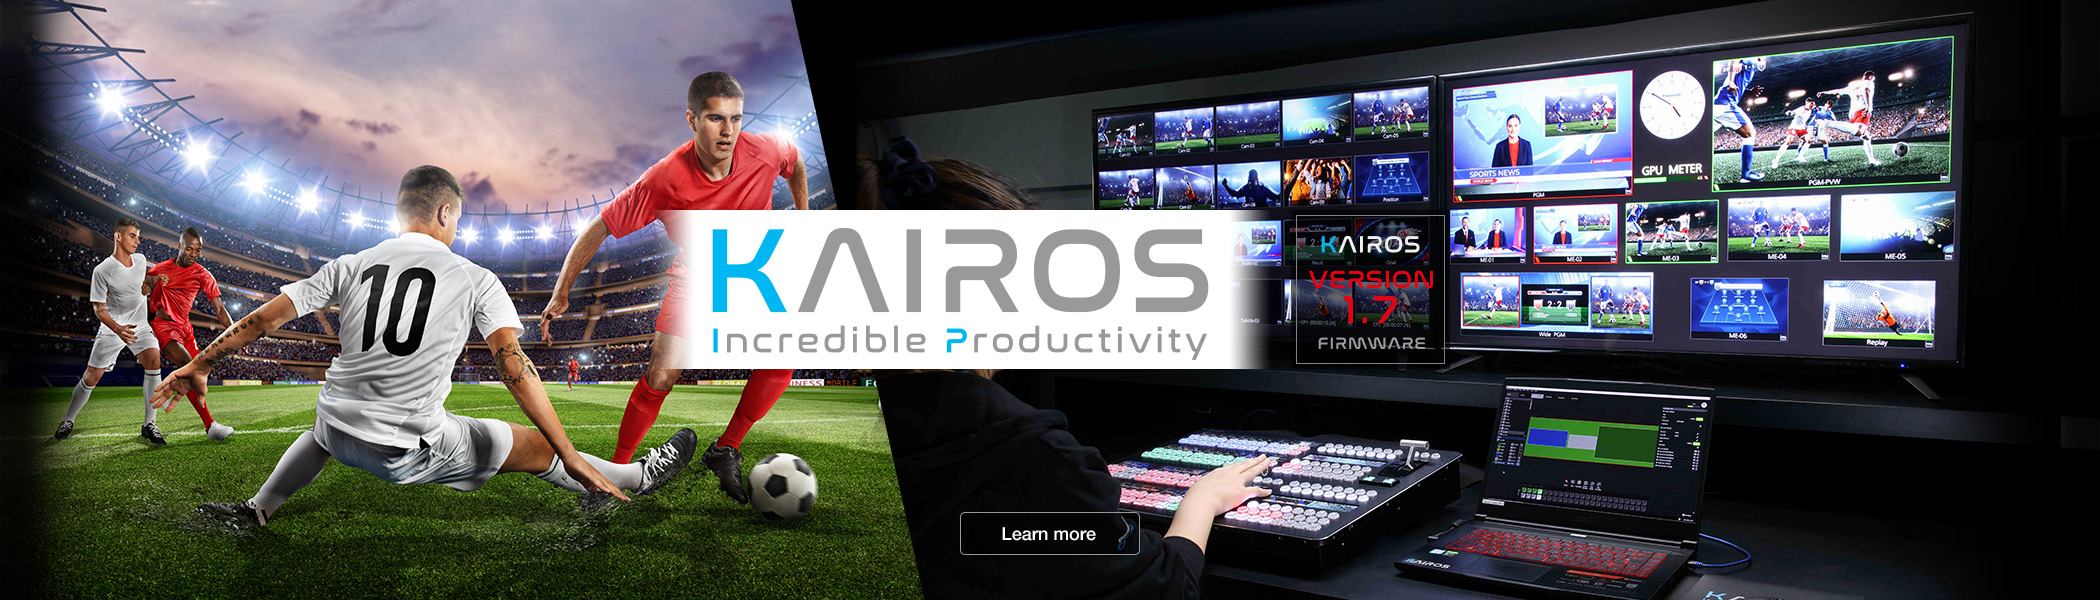 KAIROS Incredible Productivity Kairos Core 200 AT-KC200 VERSION 1.5 FIRMWARE